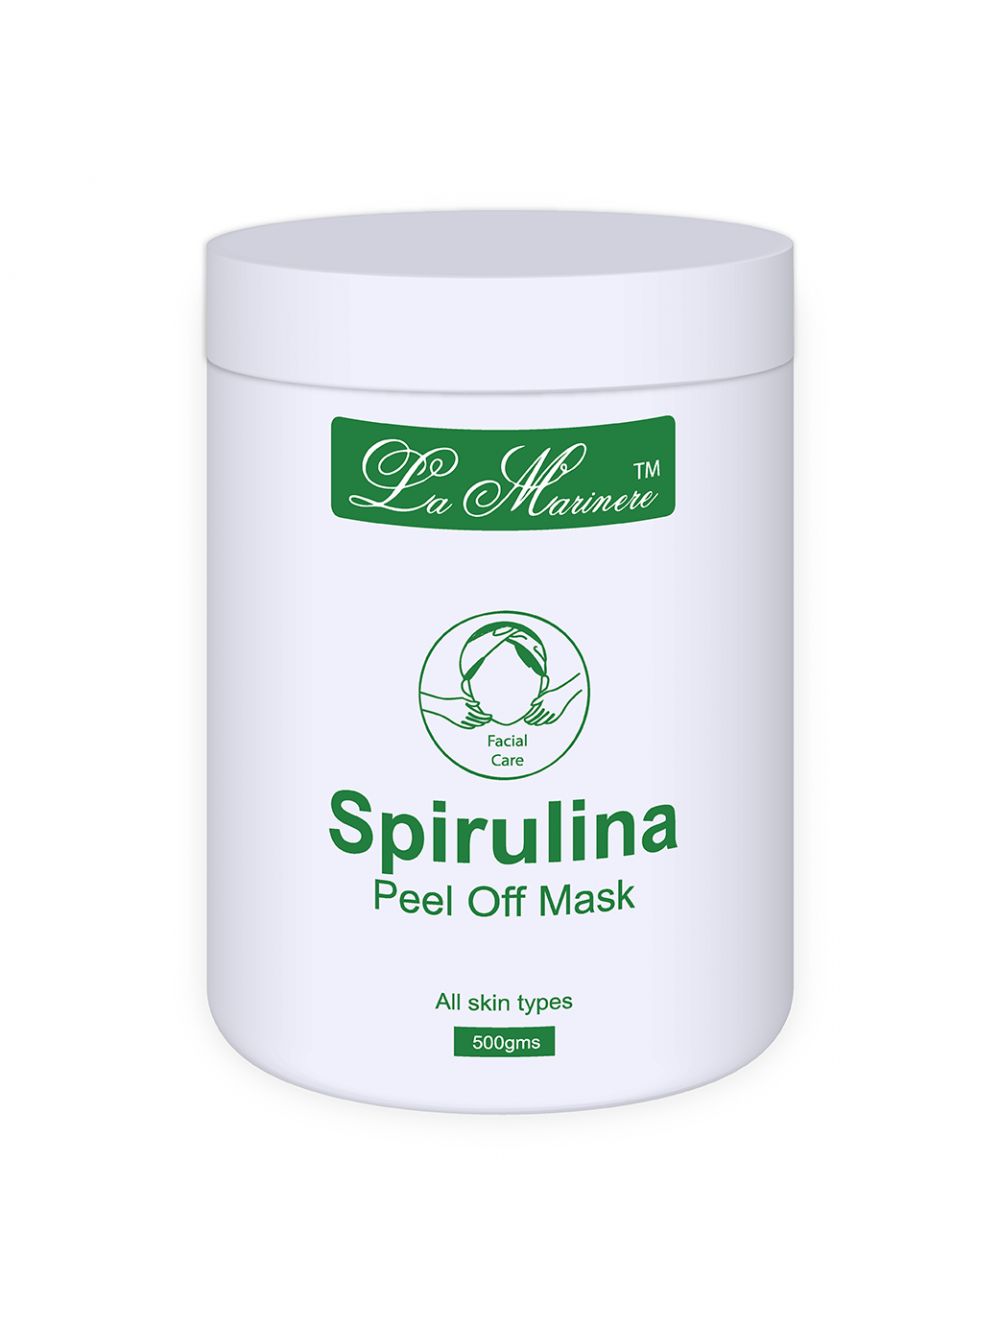 La Marinere Spirulina Peel Off Mask (500gm) - Niram